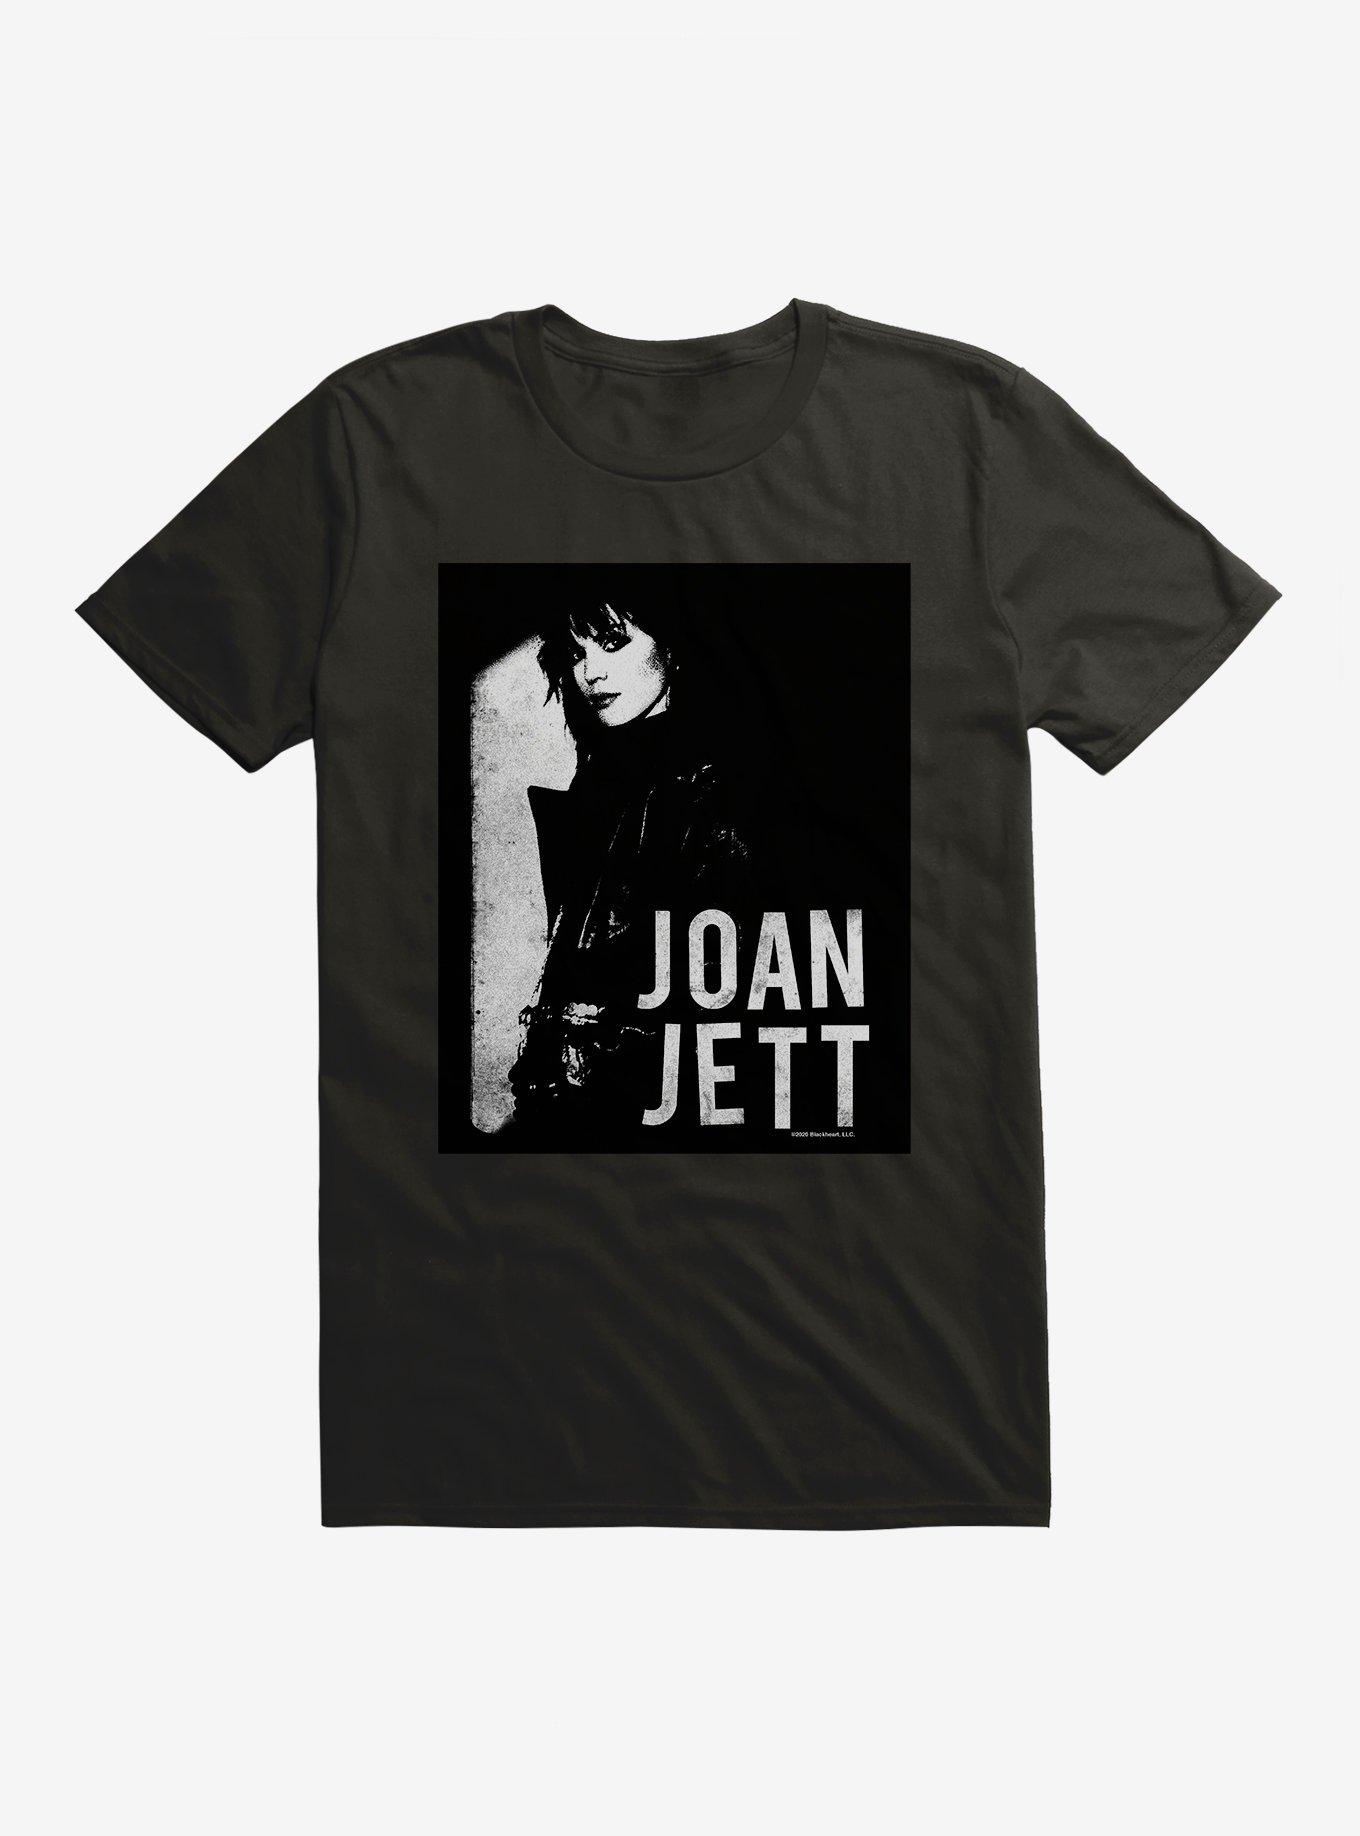 Joan Jett And The Blackhearts Portrait T-Shirt